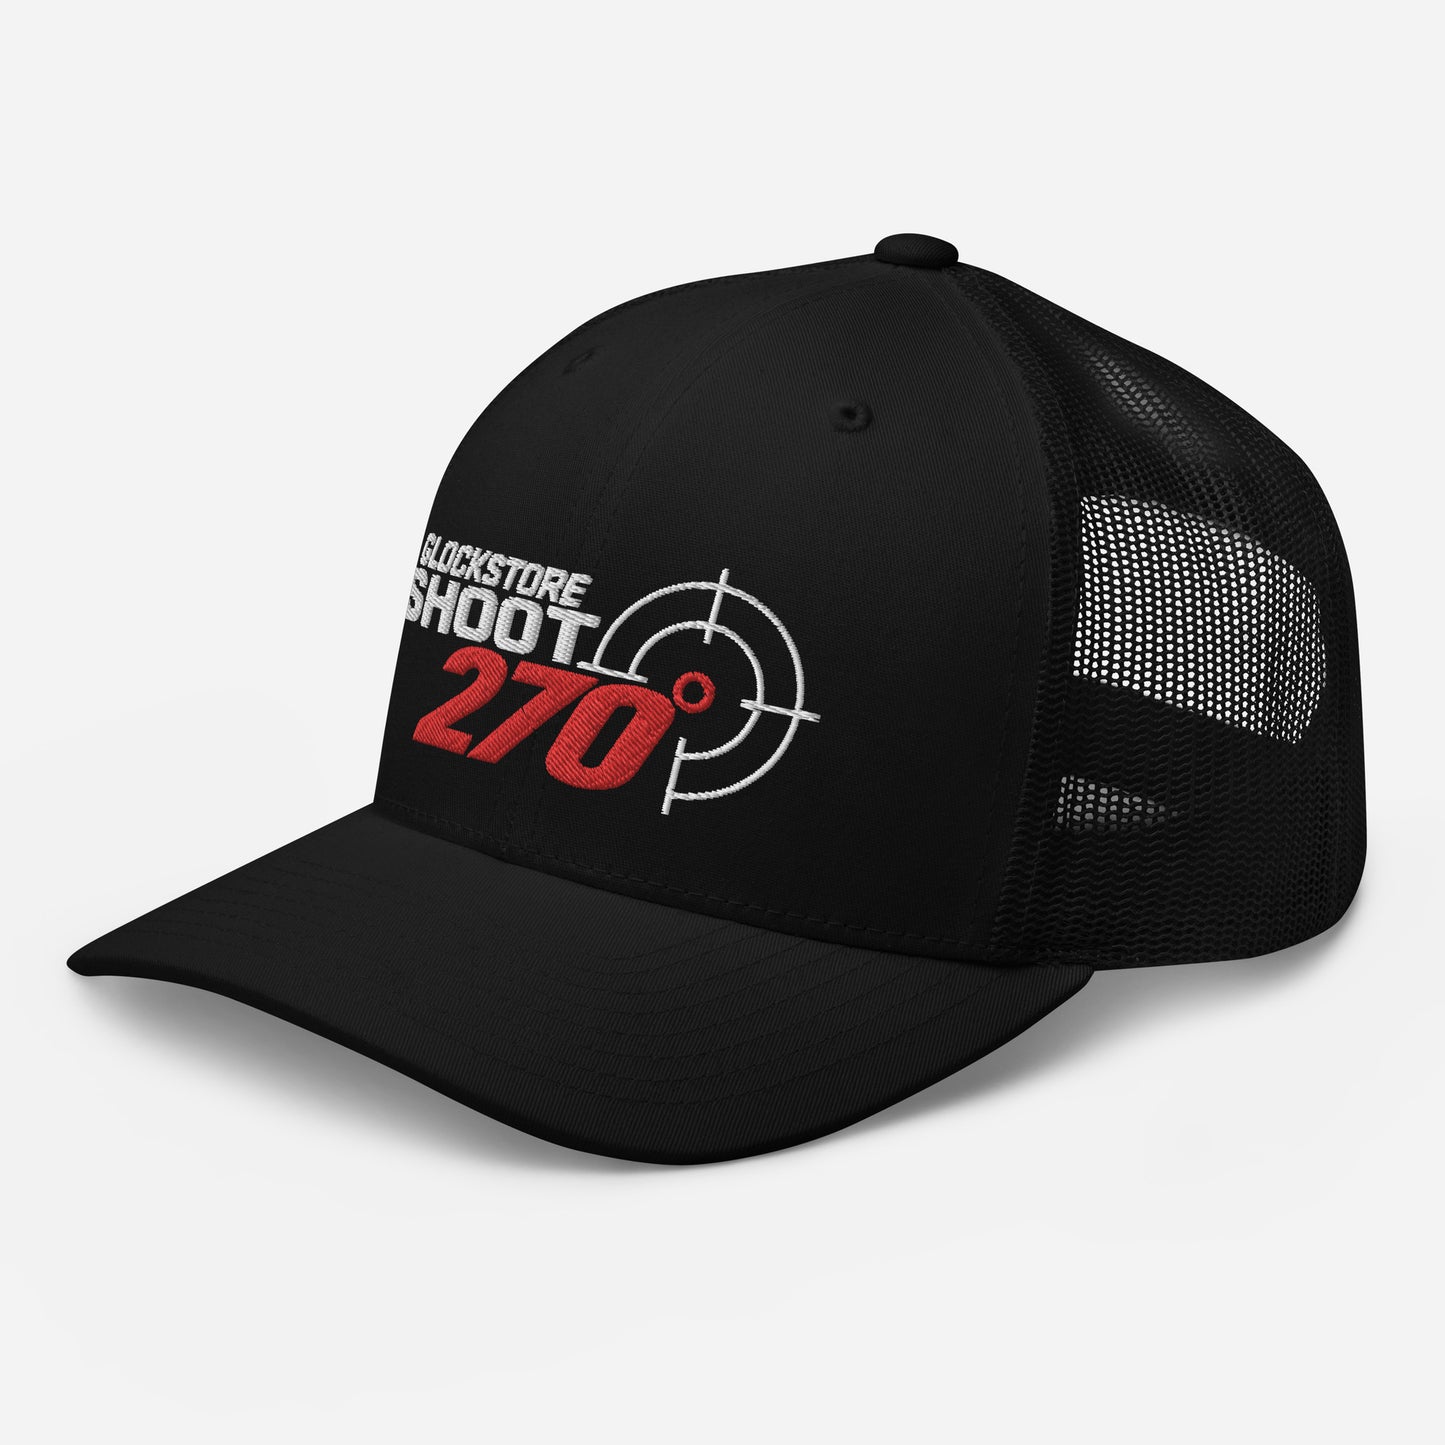 Shoot270 Logo Hat